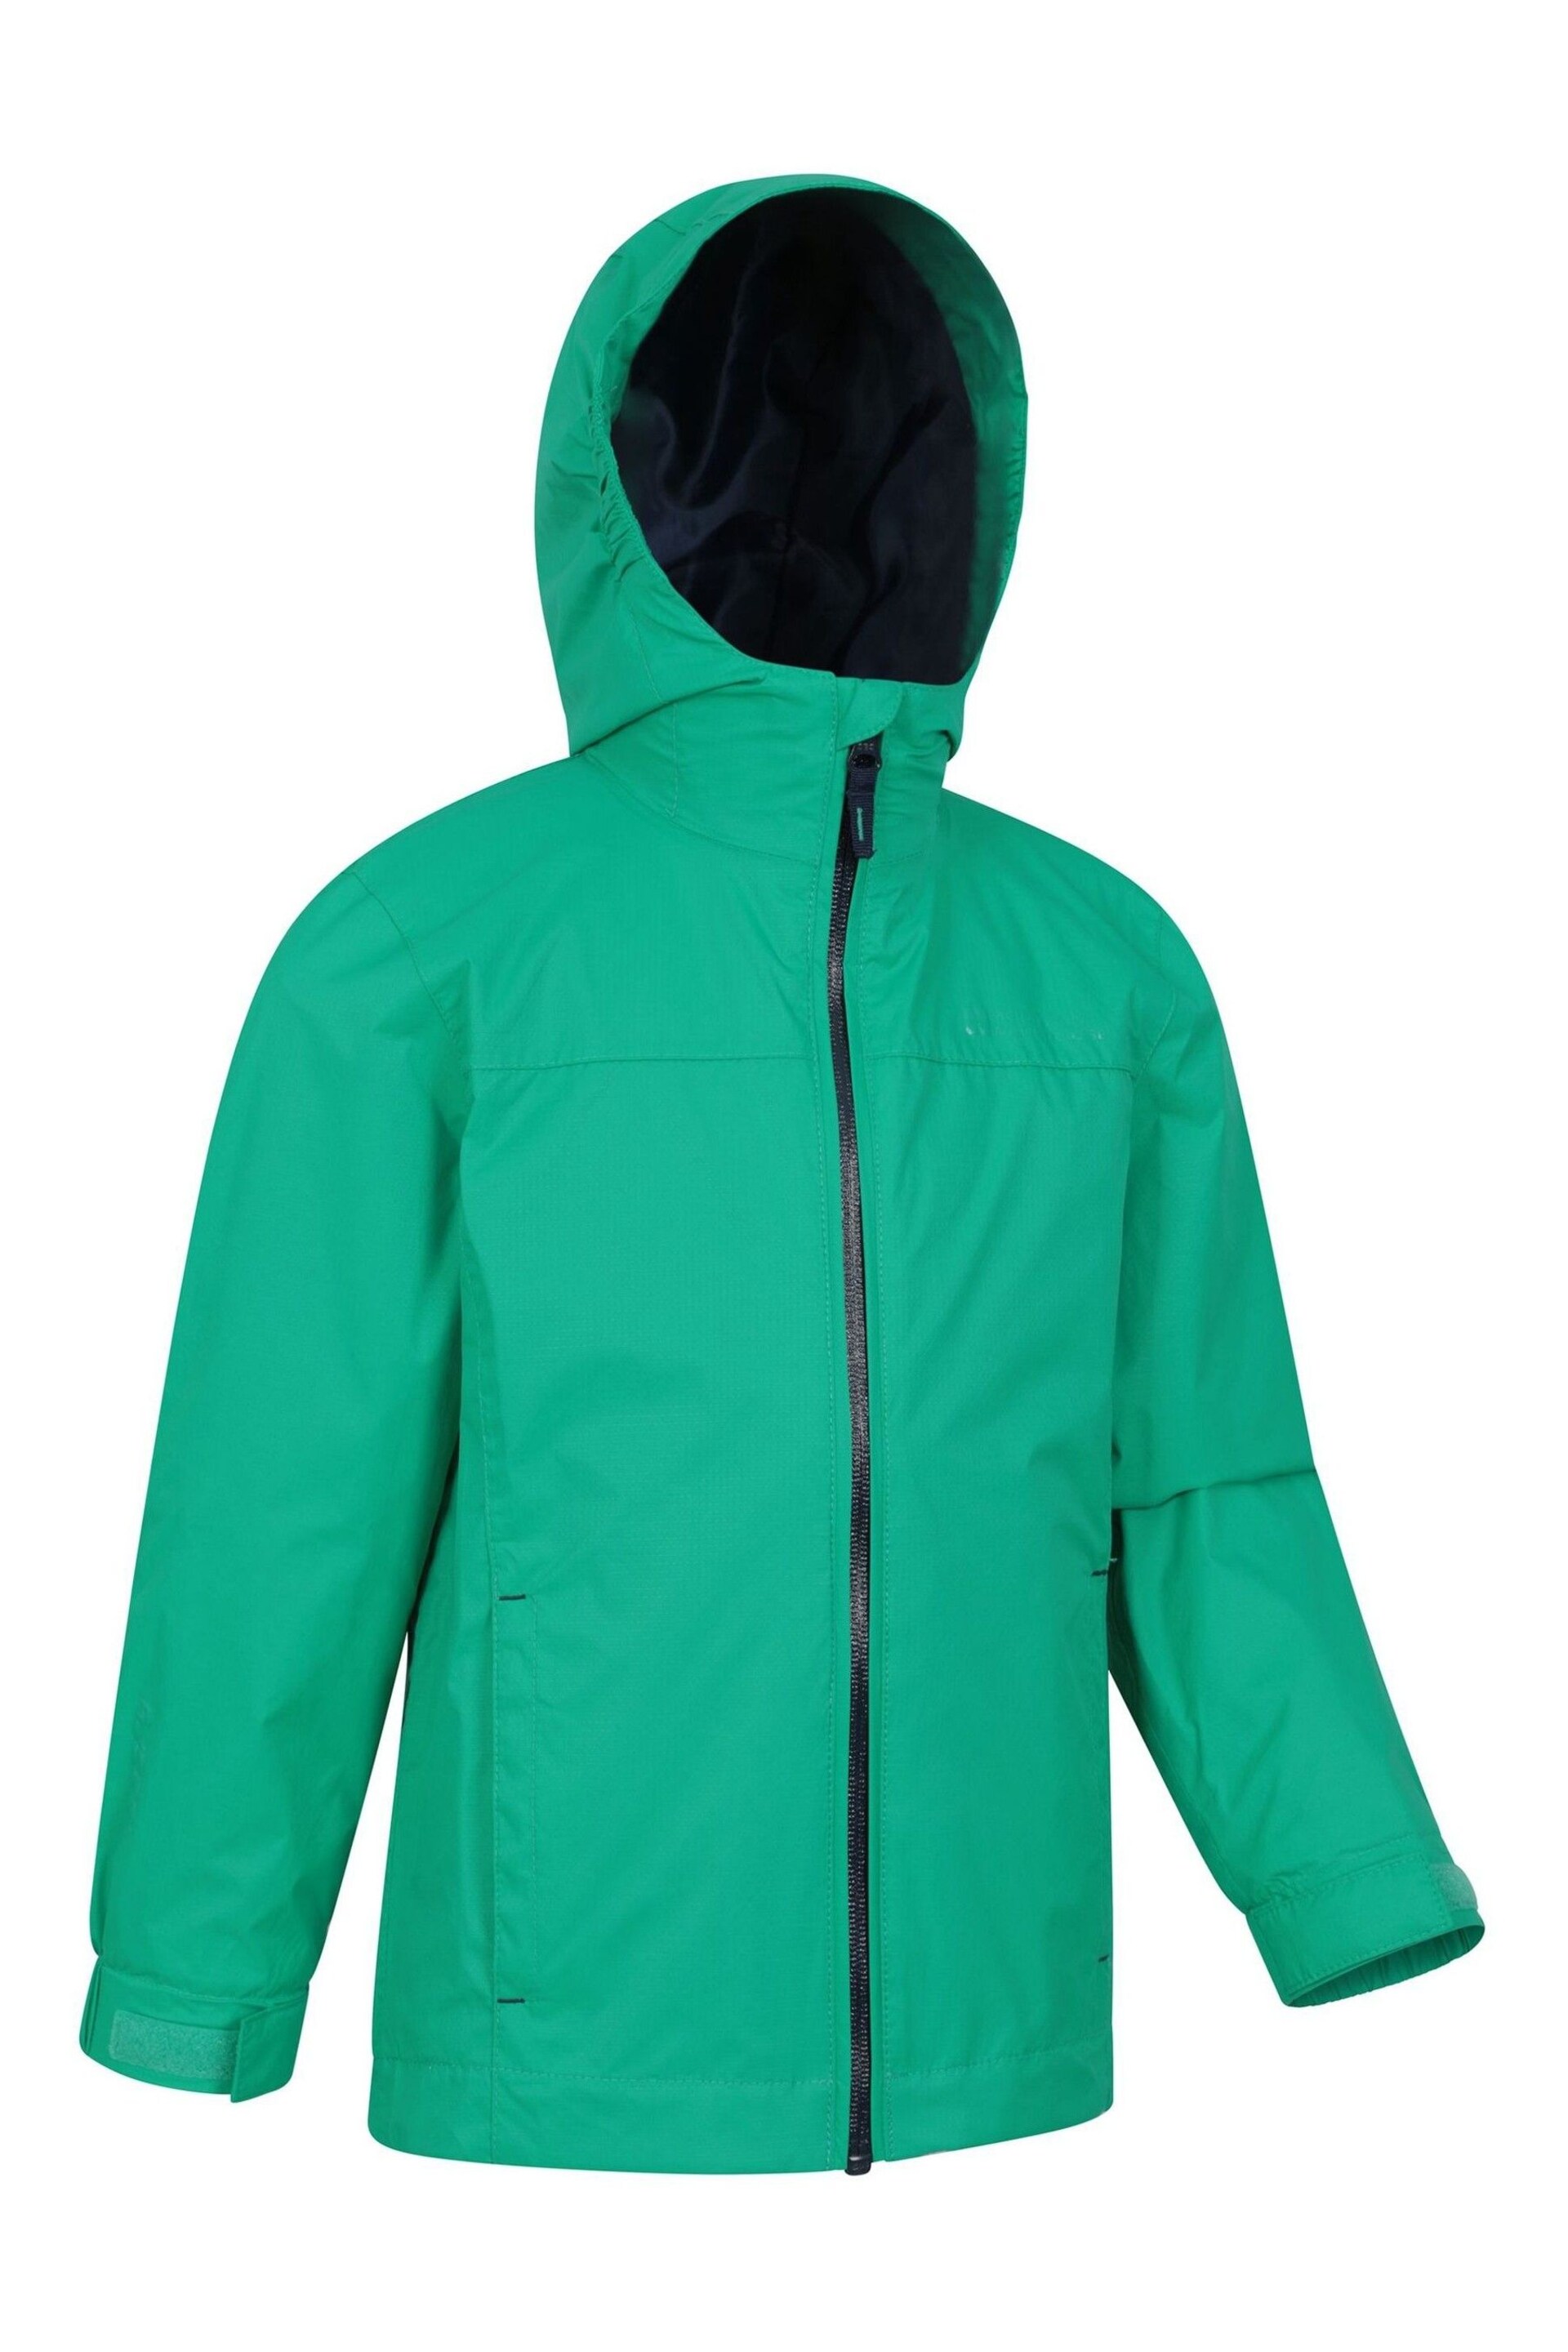 Mountain Warehouse Green Kids Torrent Waterproof Jacket - Image 2 of 5